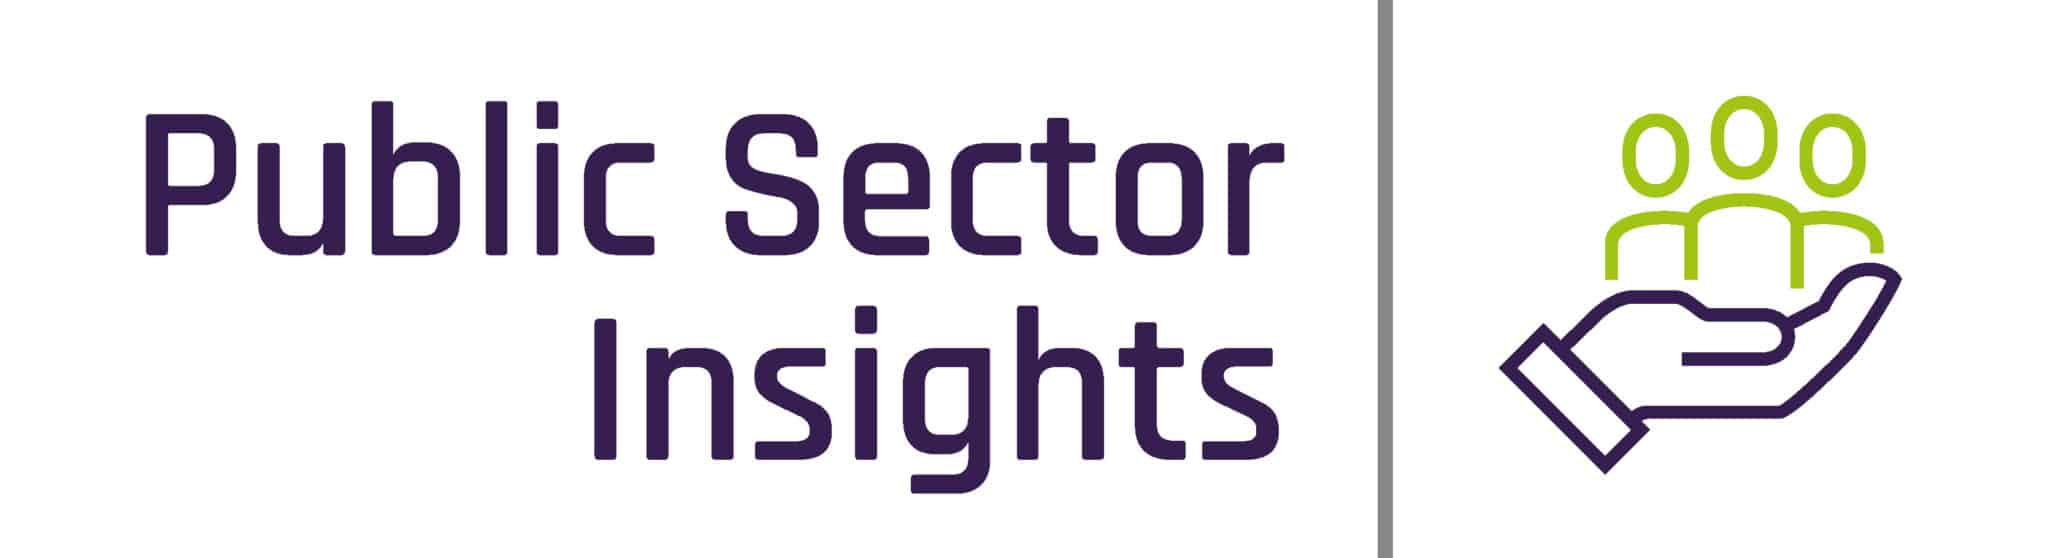 public sector insights logo